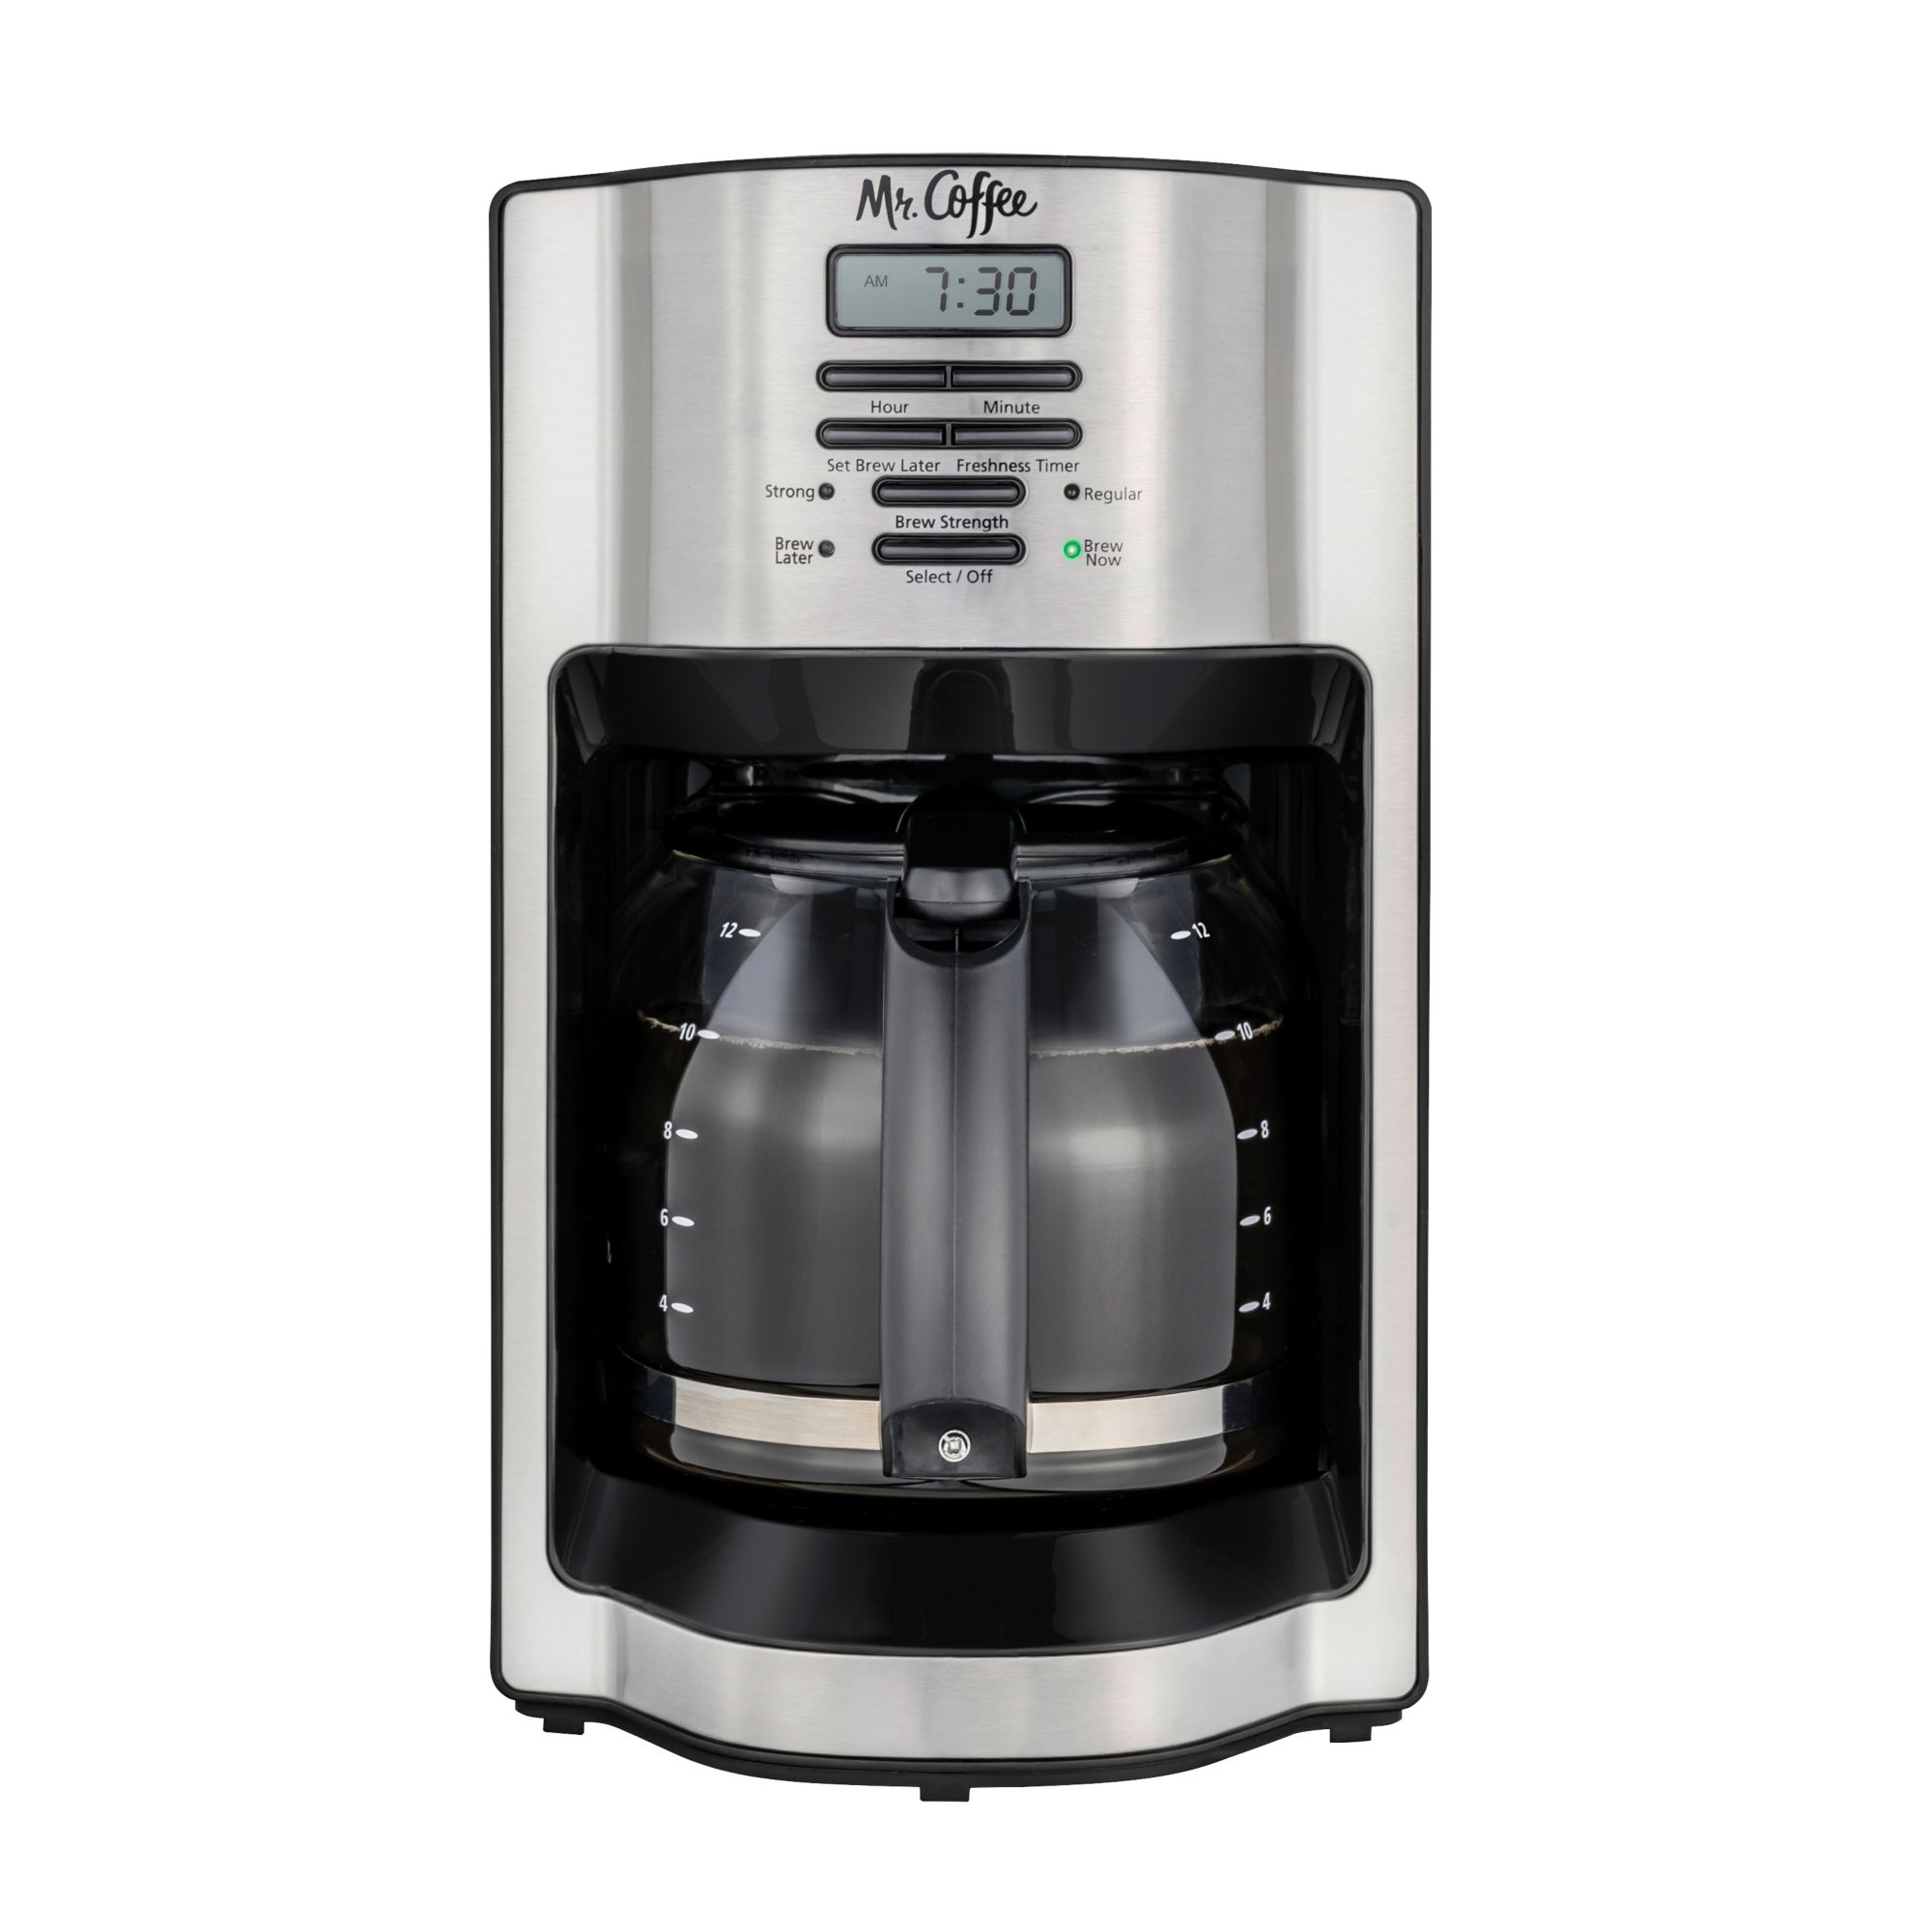 Programmable 12 Cup Coffee Maker - Model 43571Y